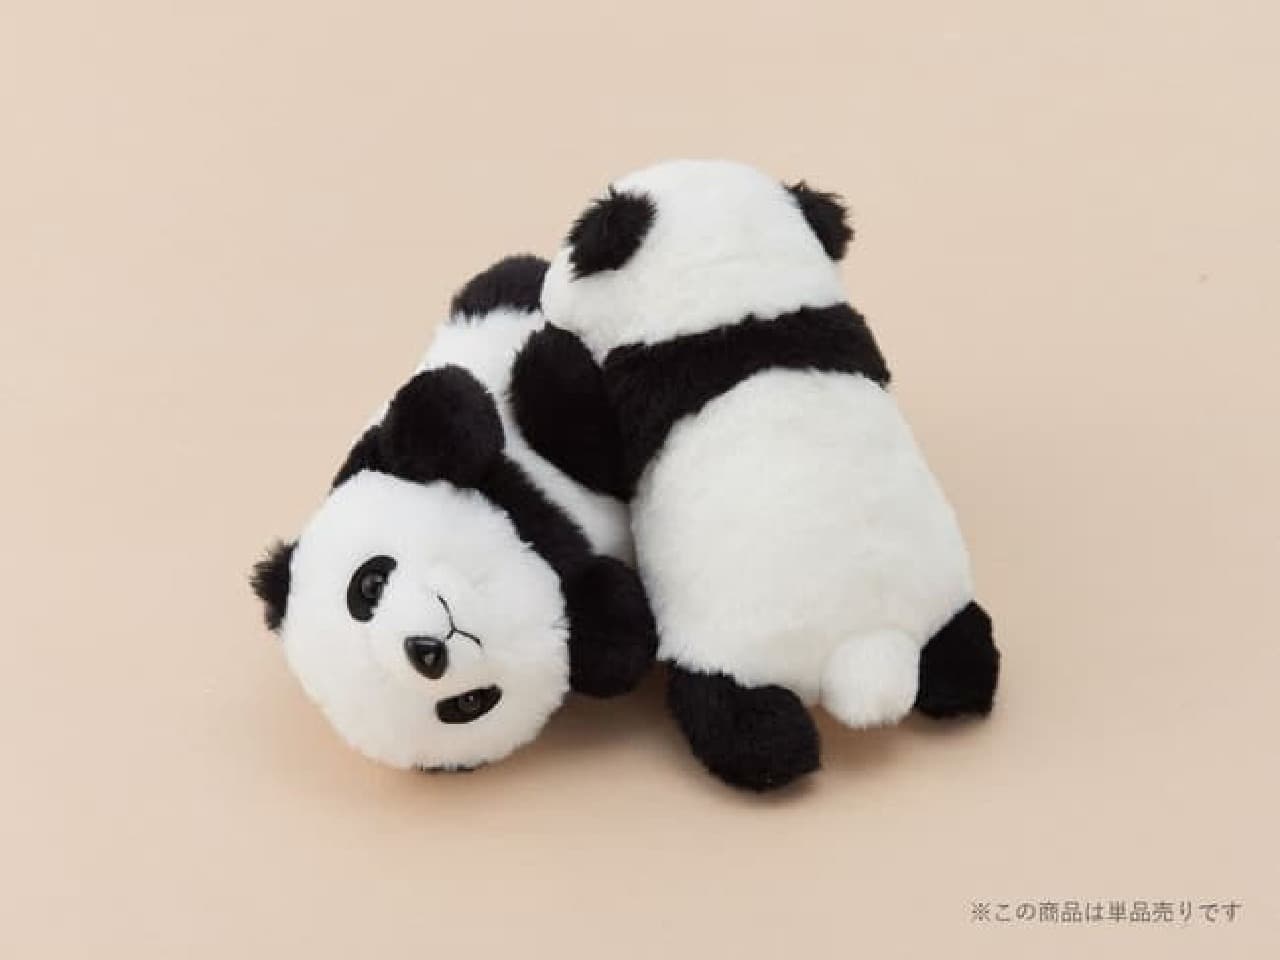 Ueno Information Center Panda Goods New --Baby Panda Twins are the motif! Plush toys, panda candies, etc.